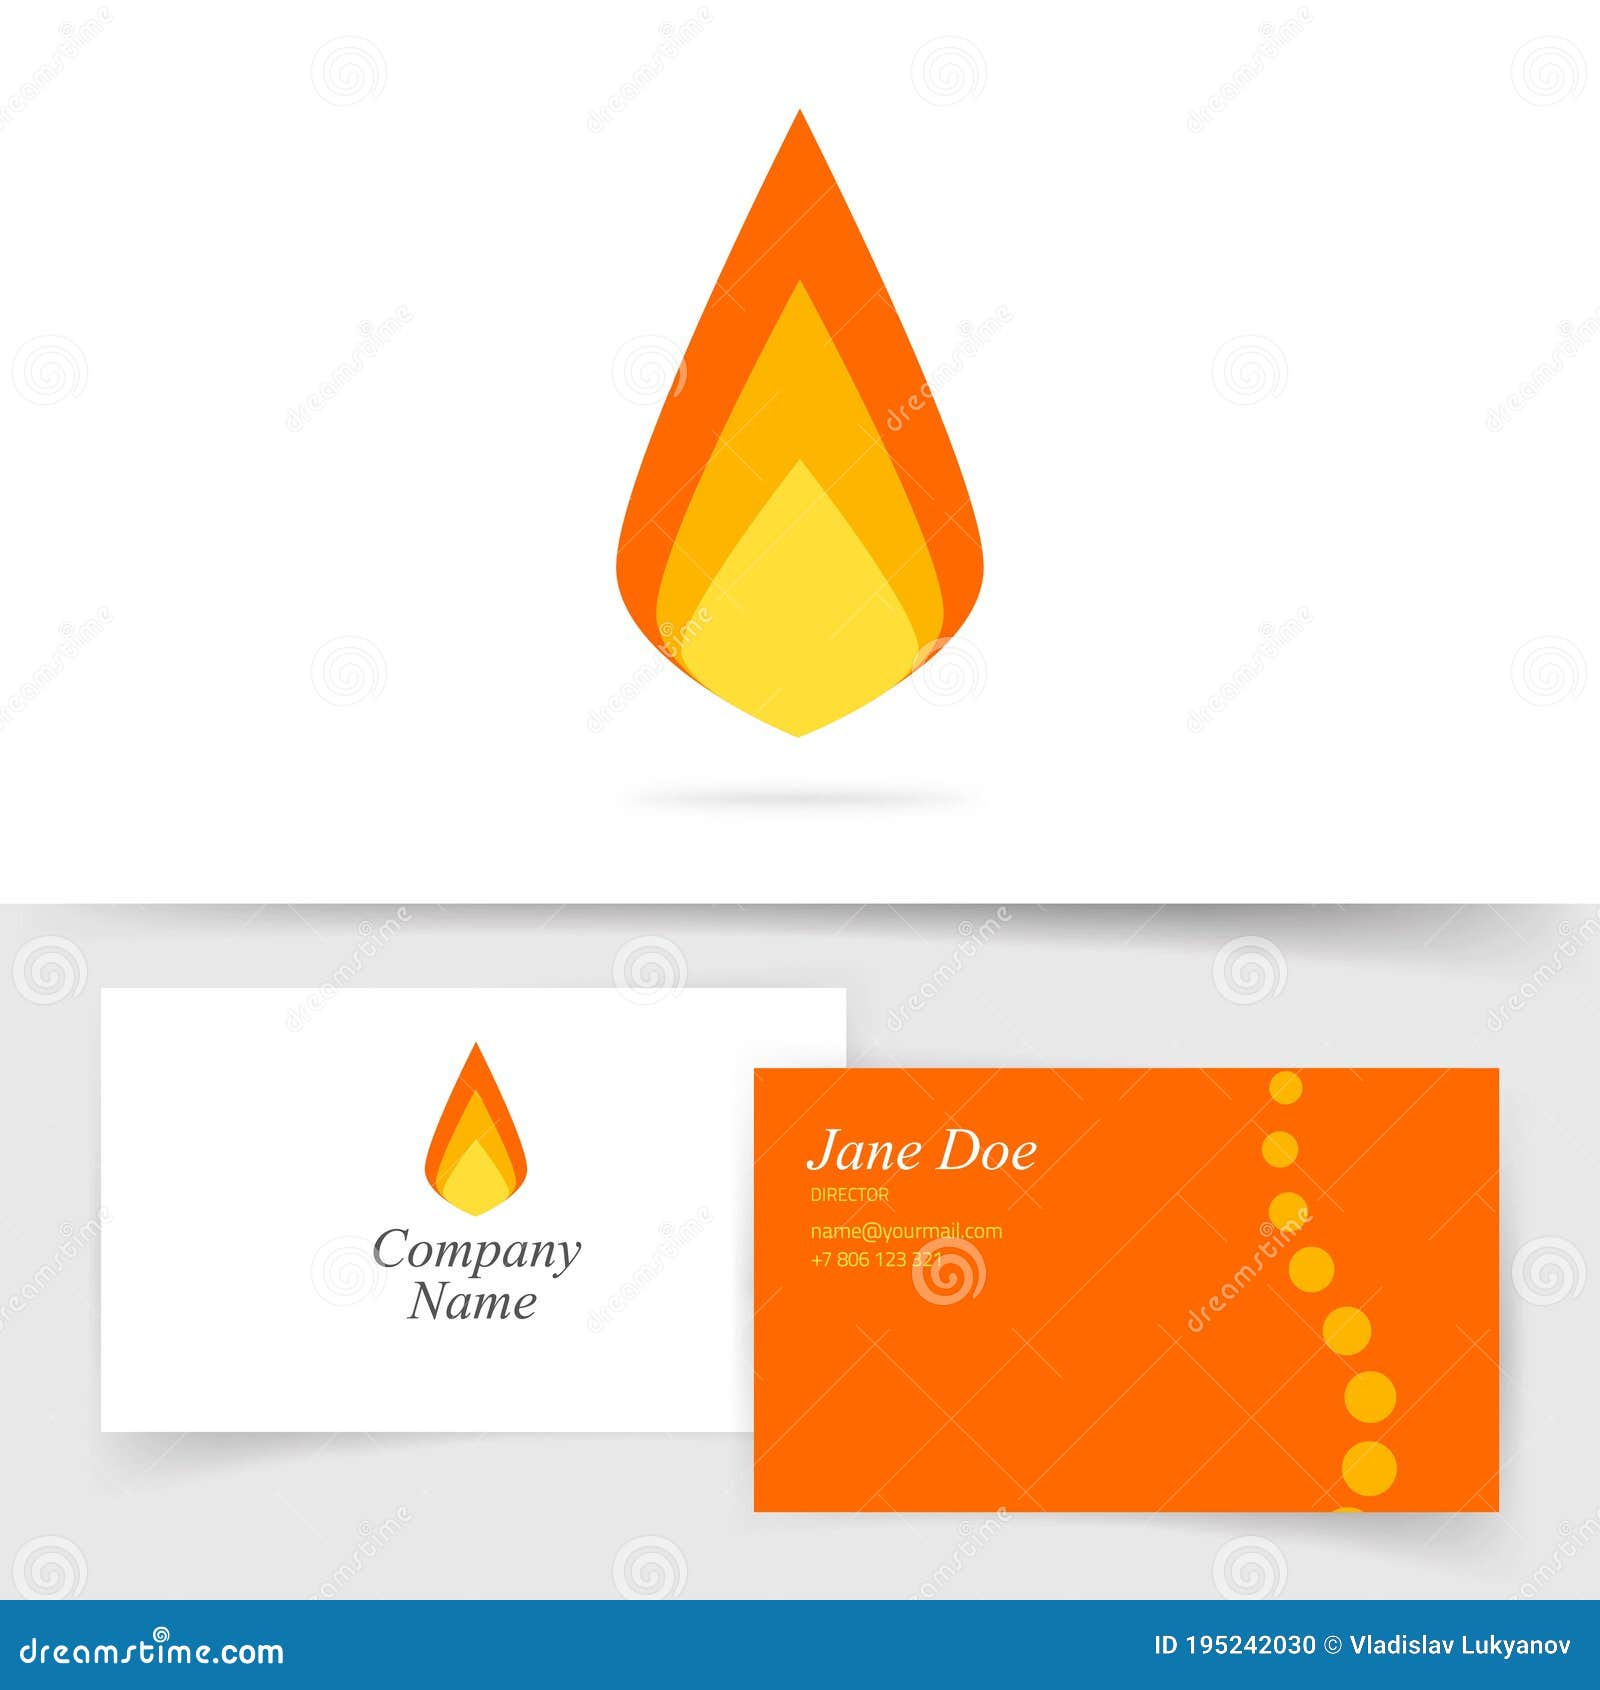 fire flame logo icon  flat cartoon on business card template , ignite blaze geometric symmetric , idea